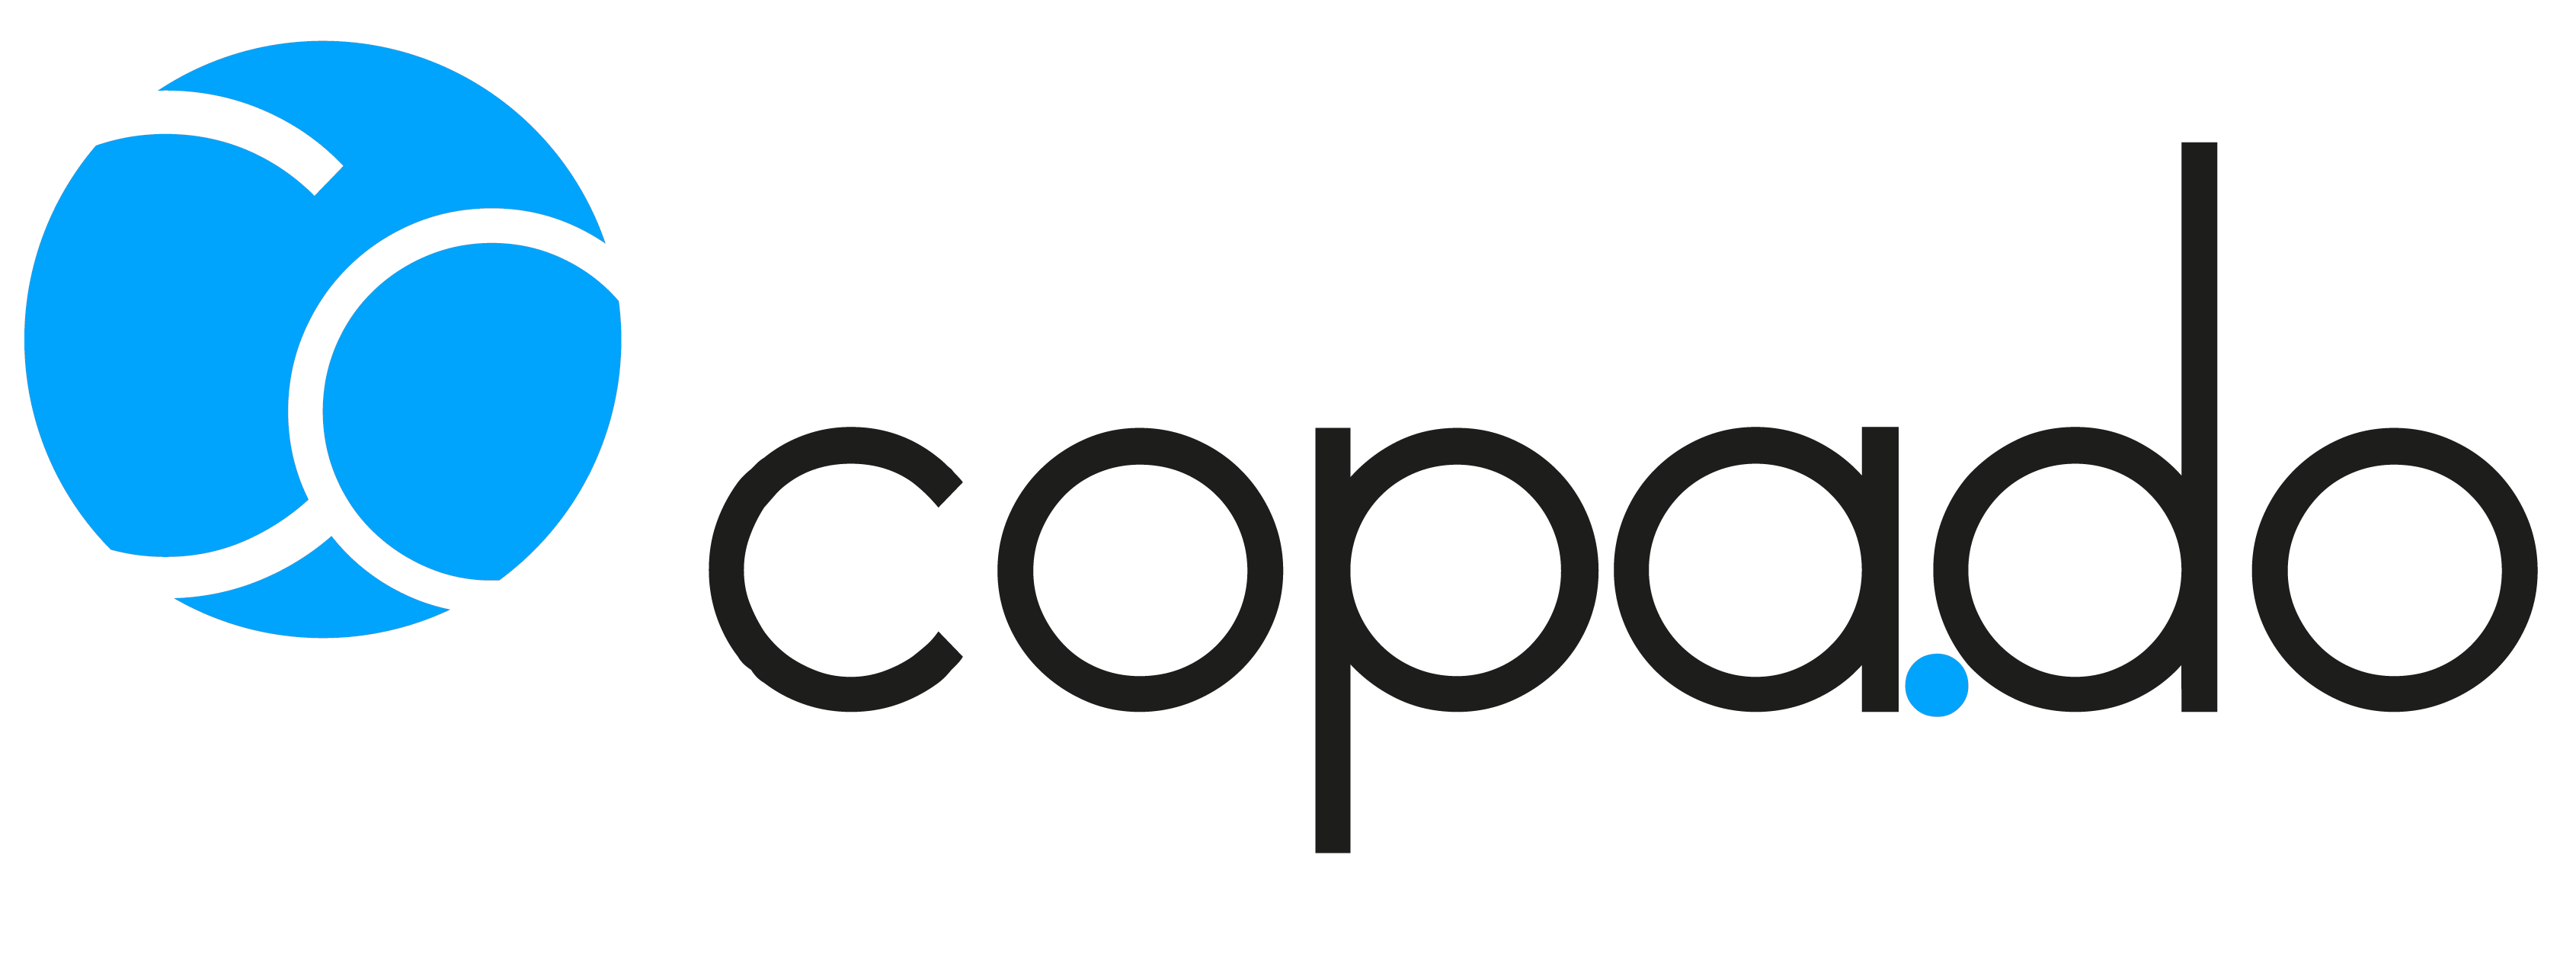 Copado Logo Transparency